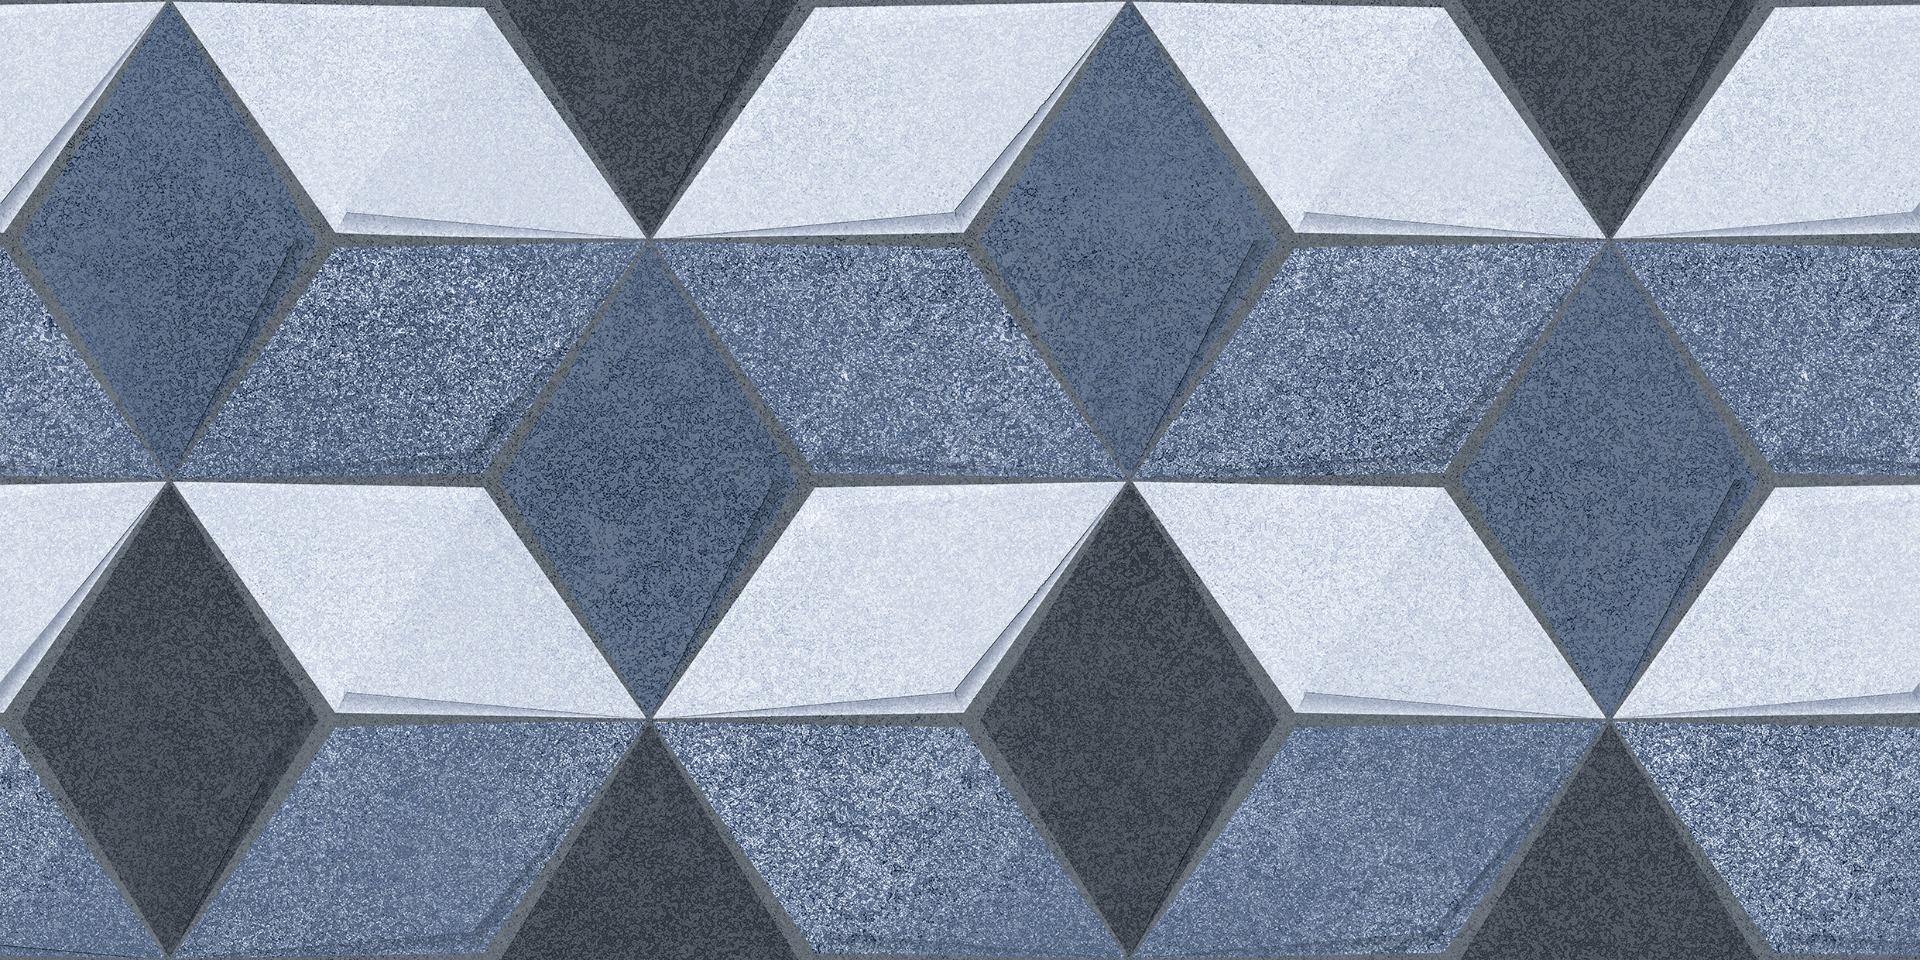 Chequered Tiles for Bathroom Tiles, Kitchen Tiles, Balcony Tiles